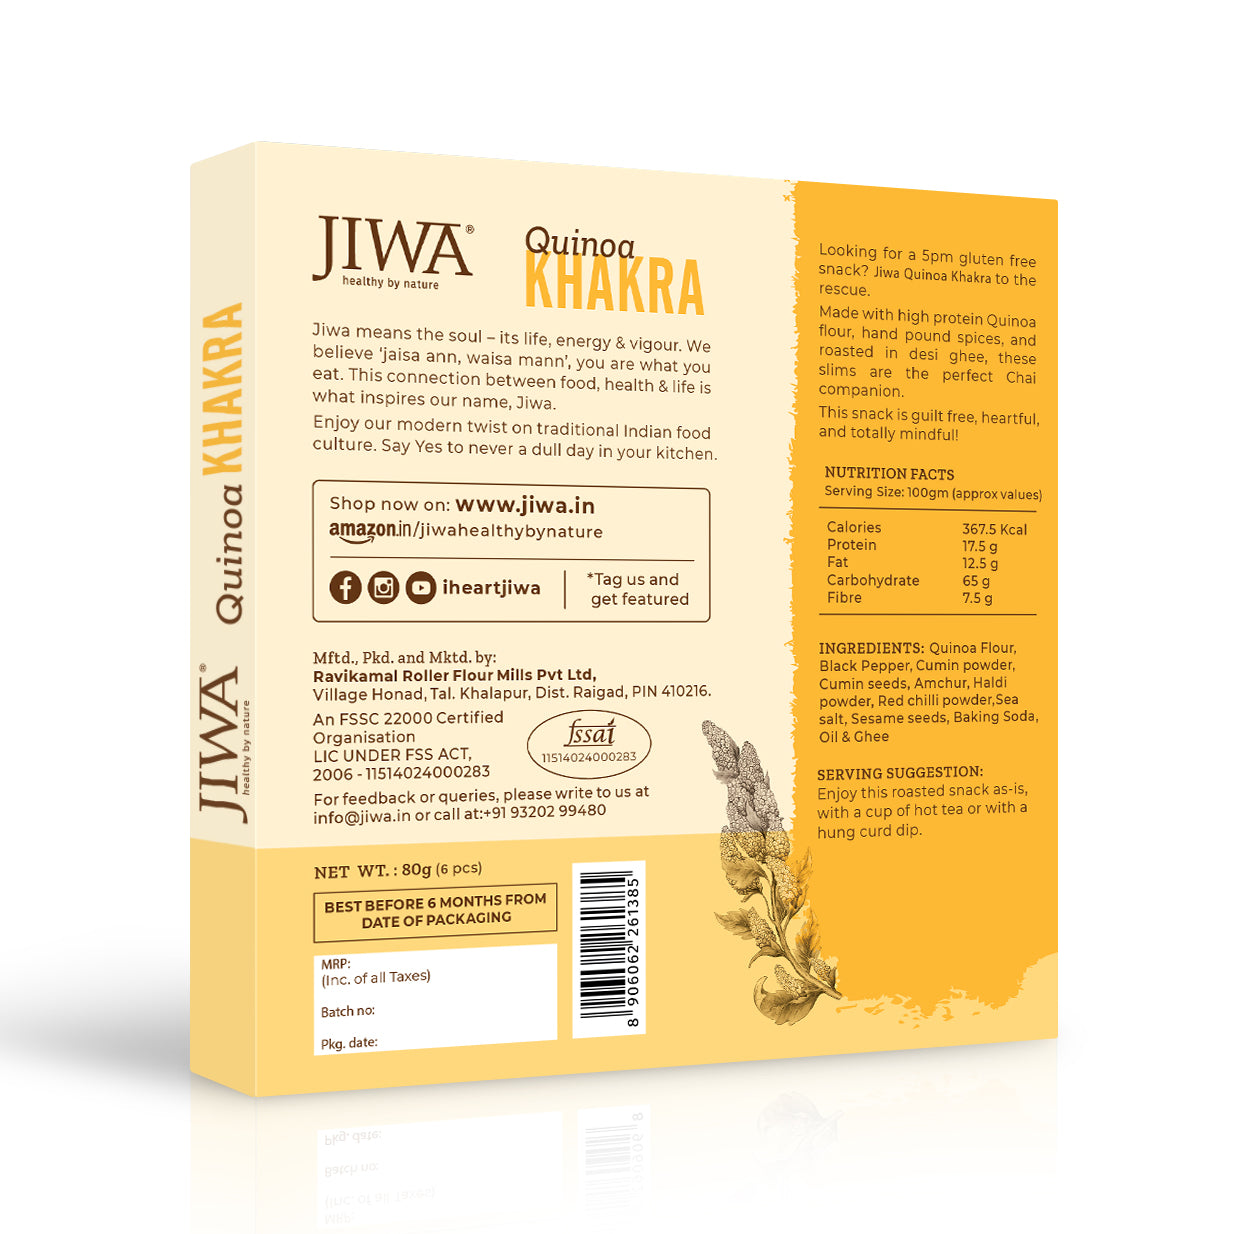 buy quinoa khakra online-jiwa nutrition chart